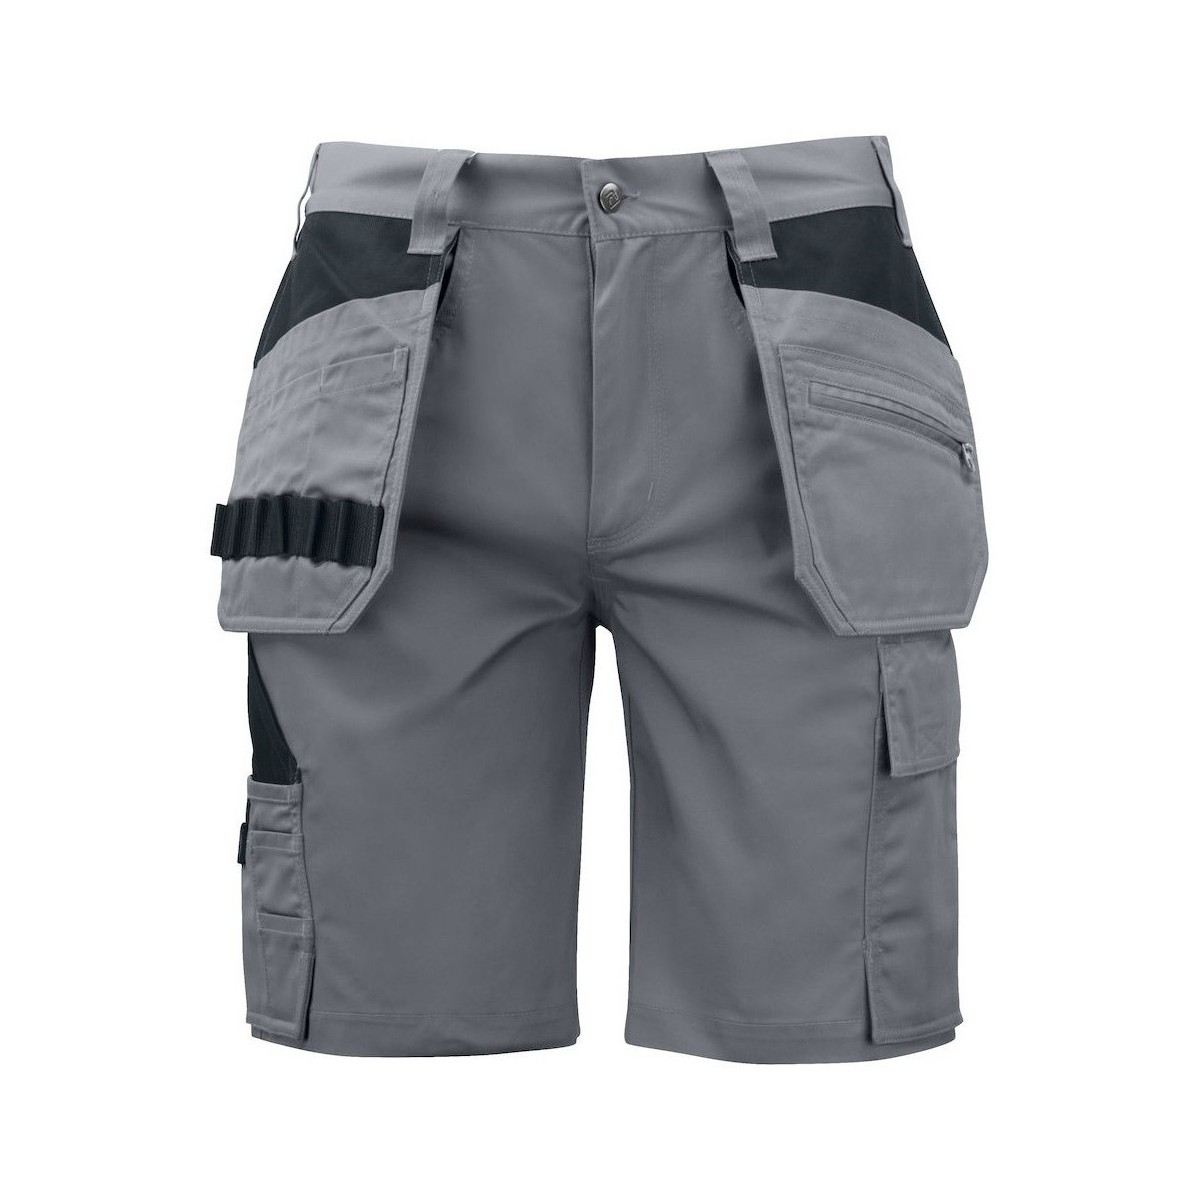 textil Hombre Shorts / Bermudas Projob UB811 Gris